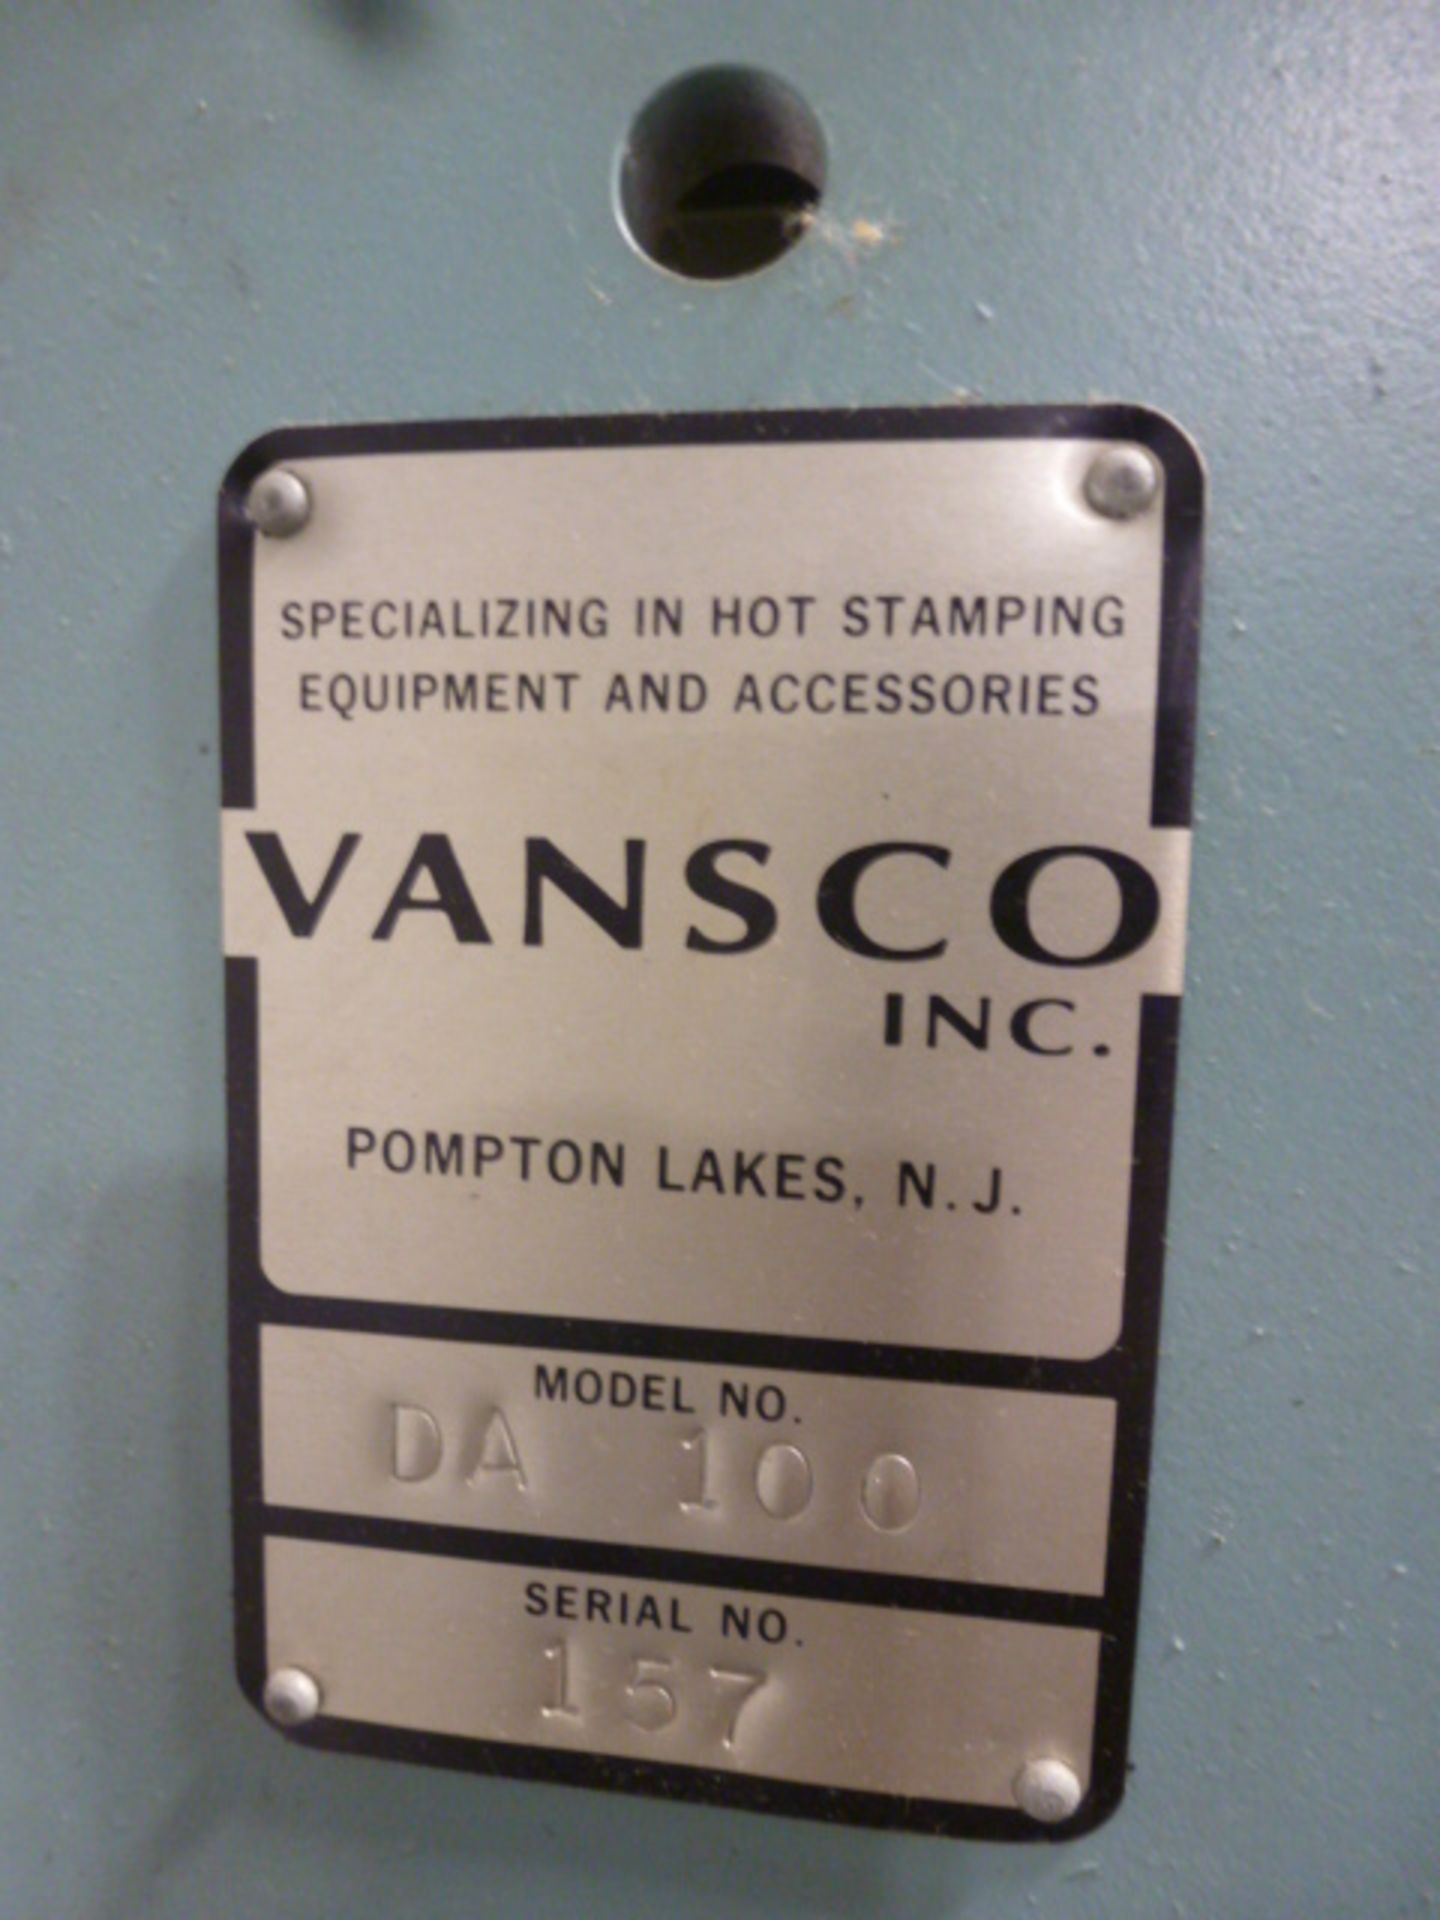 Vansco Foil Stamping Press w/Stand, m/n DA-100, s/n 157 - Image 3 of 3